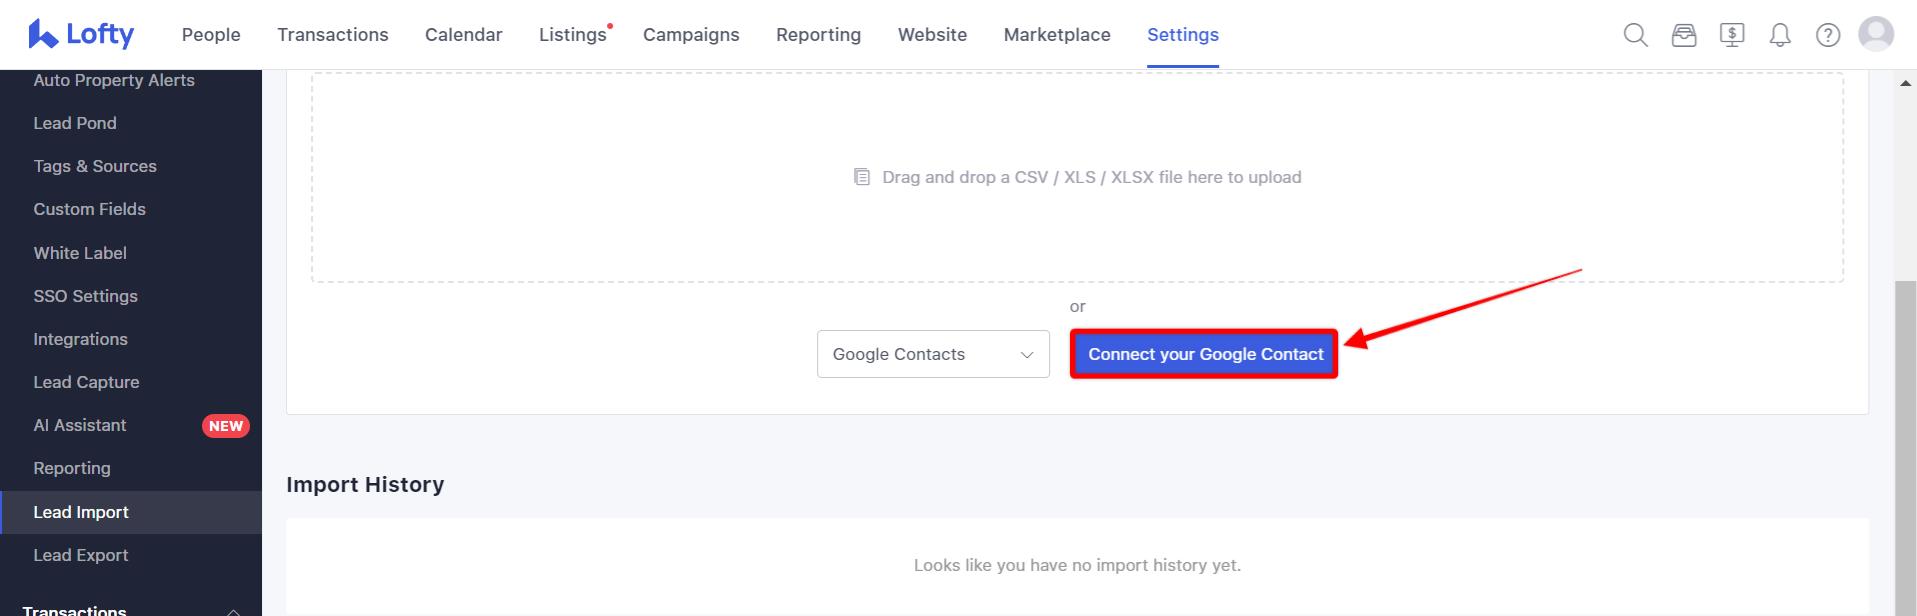 lead import google contacts option.jpeg